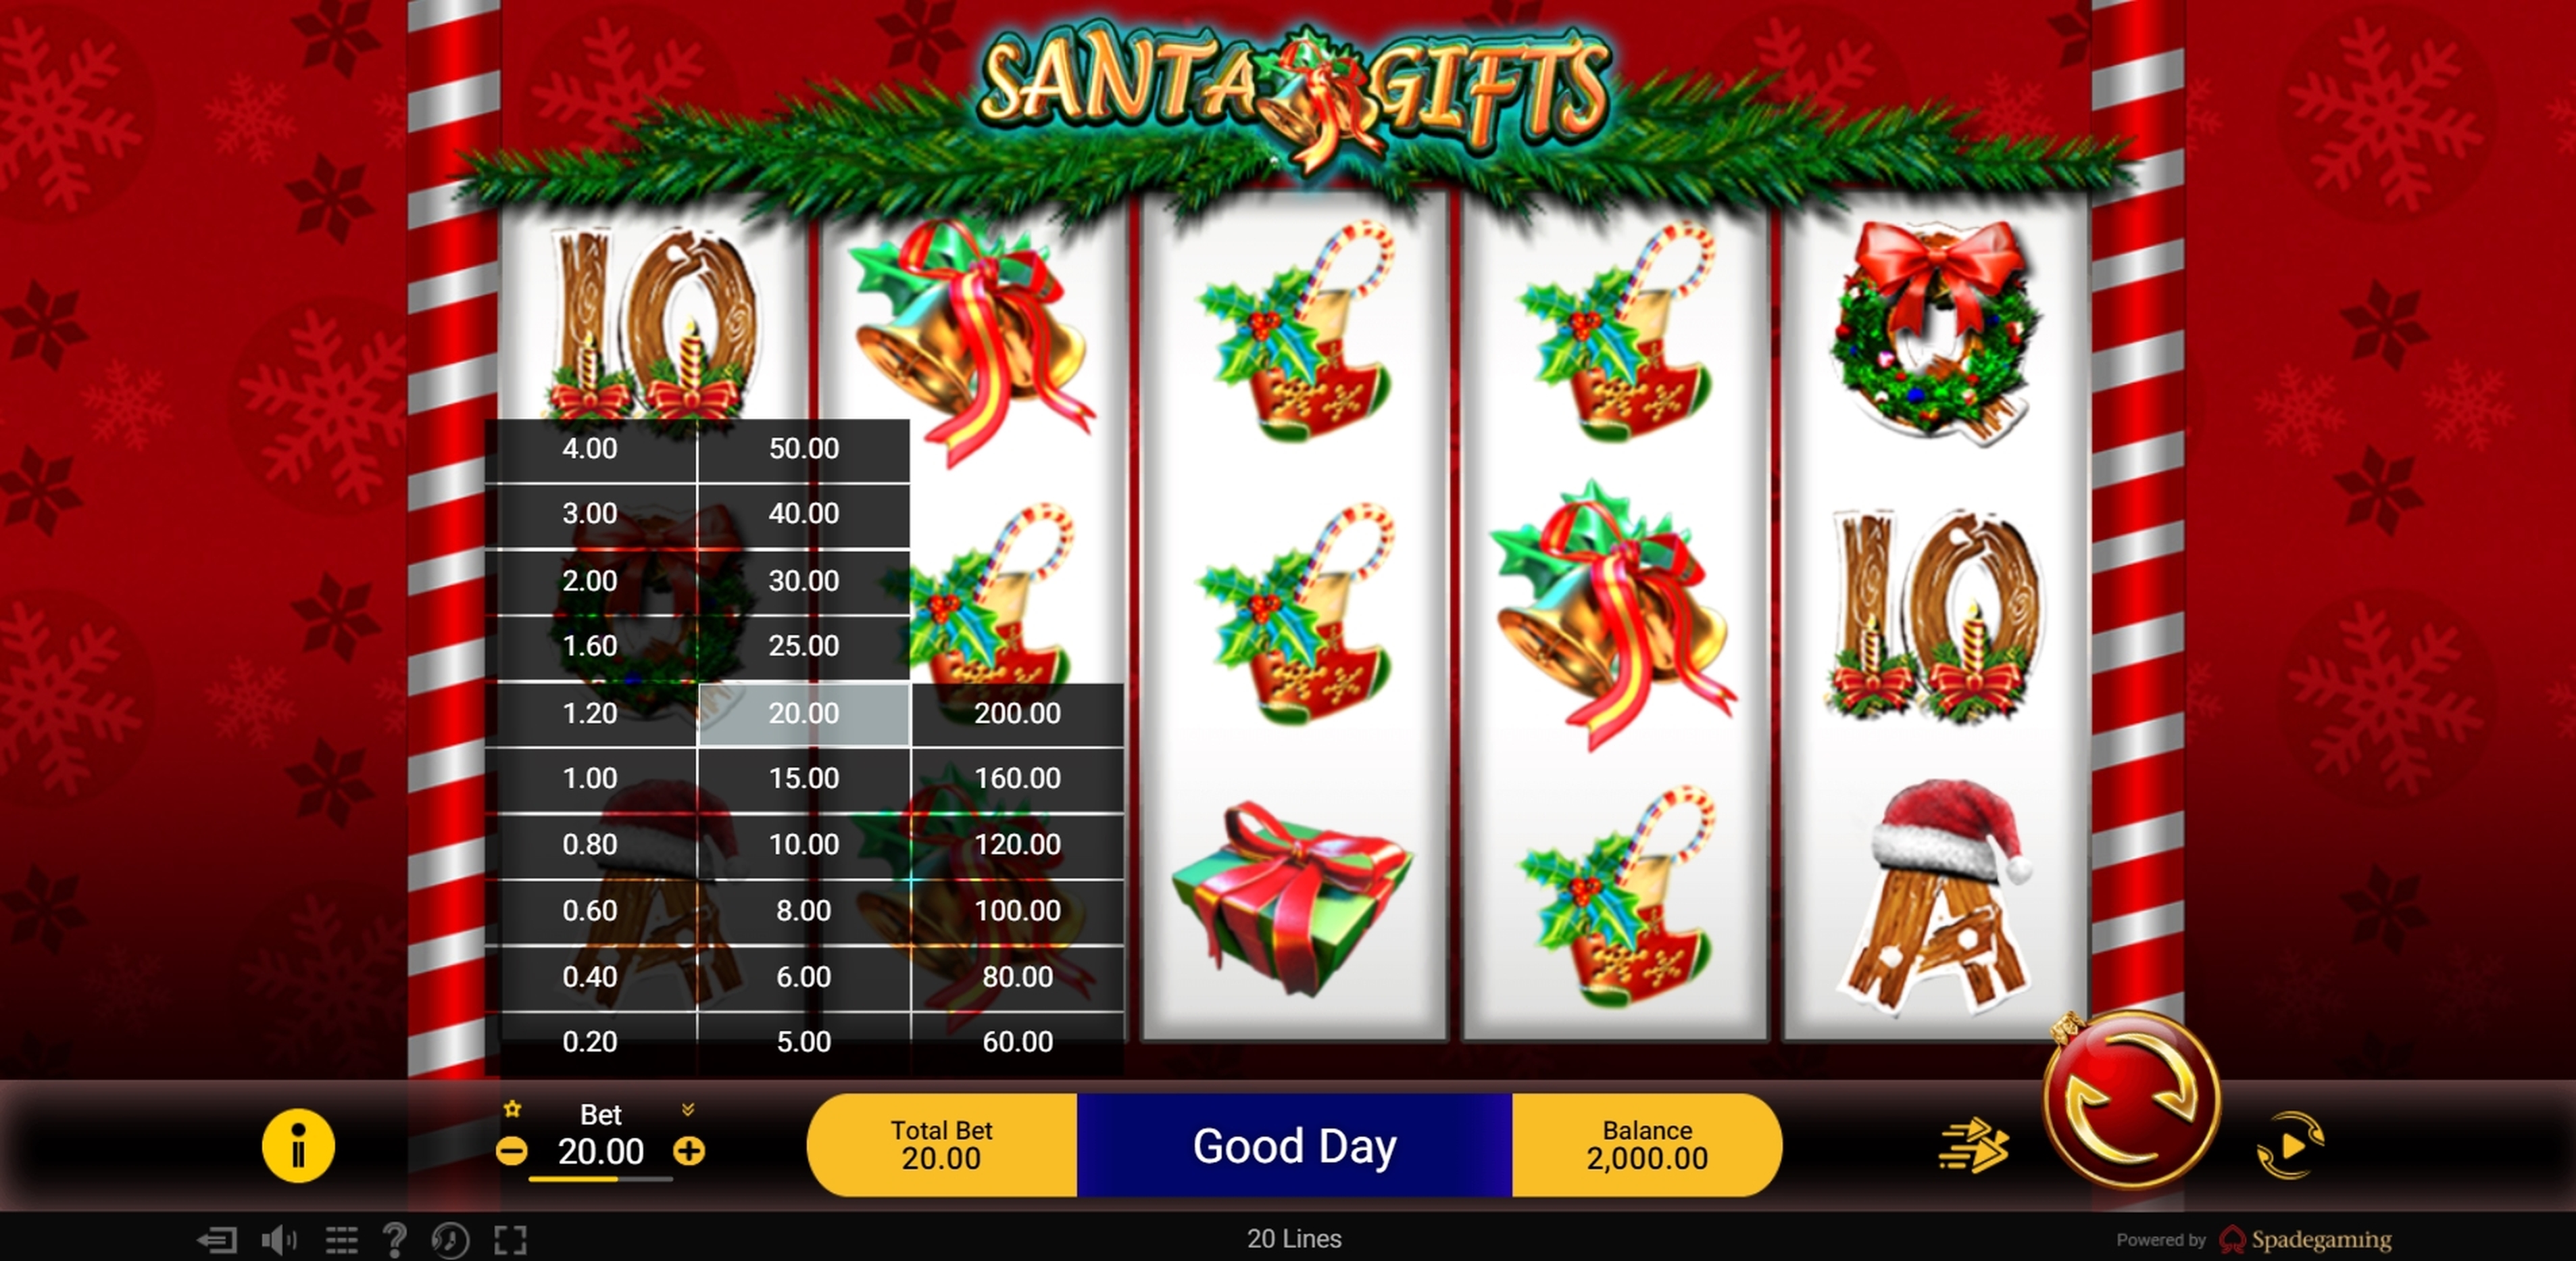 Reels in Santa Gifts Slot Game by Spade Gaming